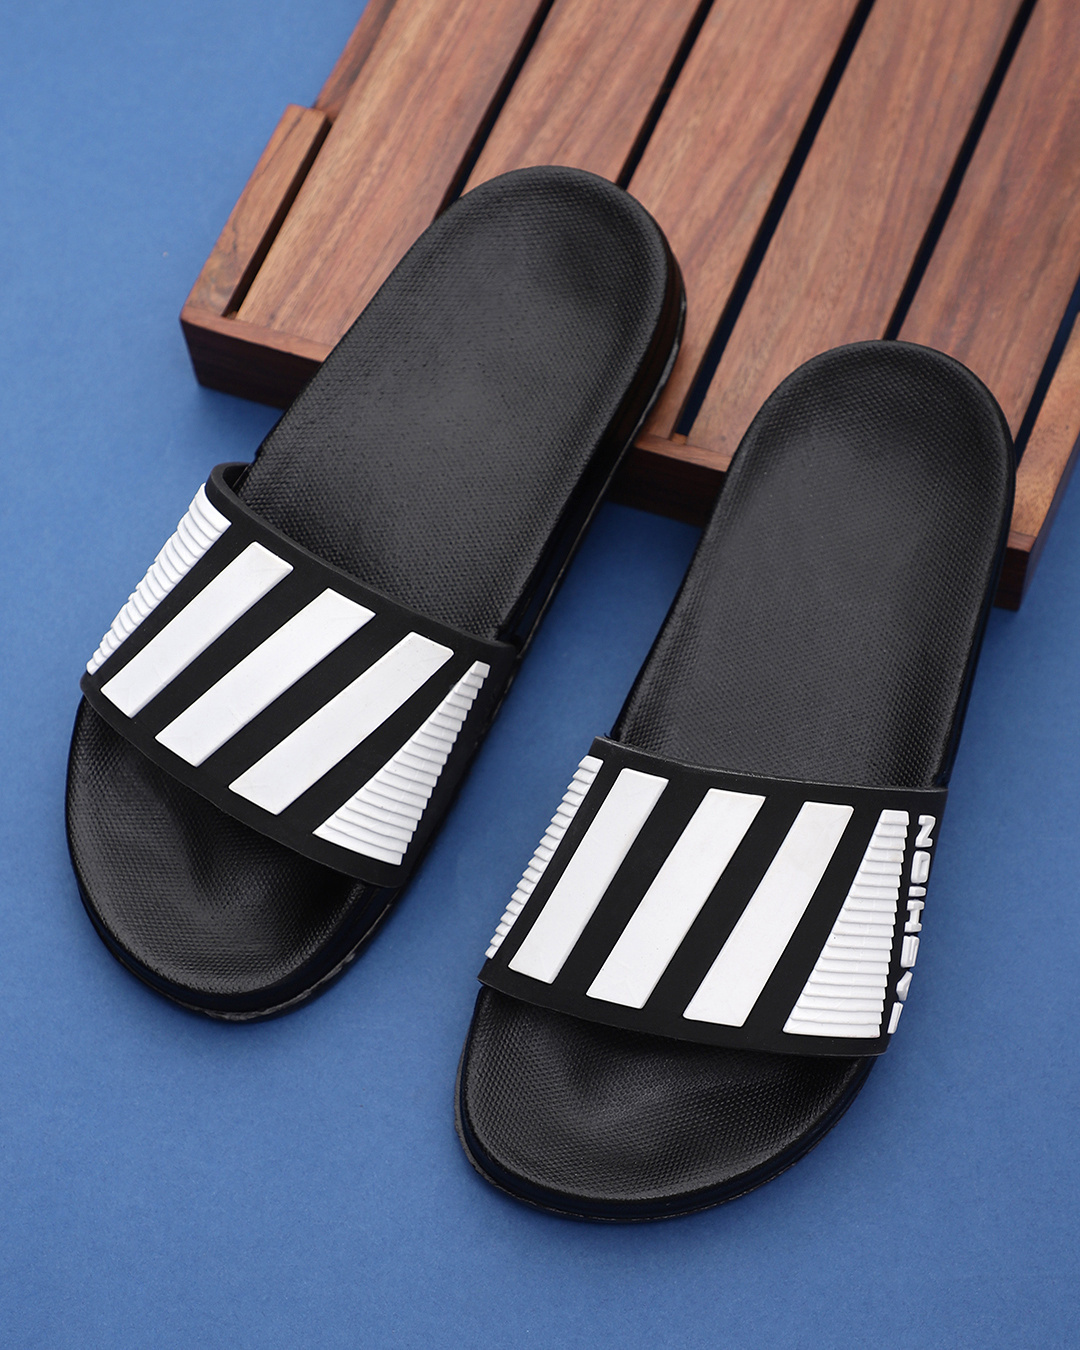 Buy Men's Black & White Striped Lightweight Sliders Online in India at ...